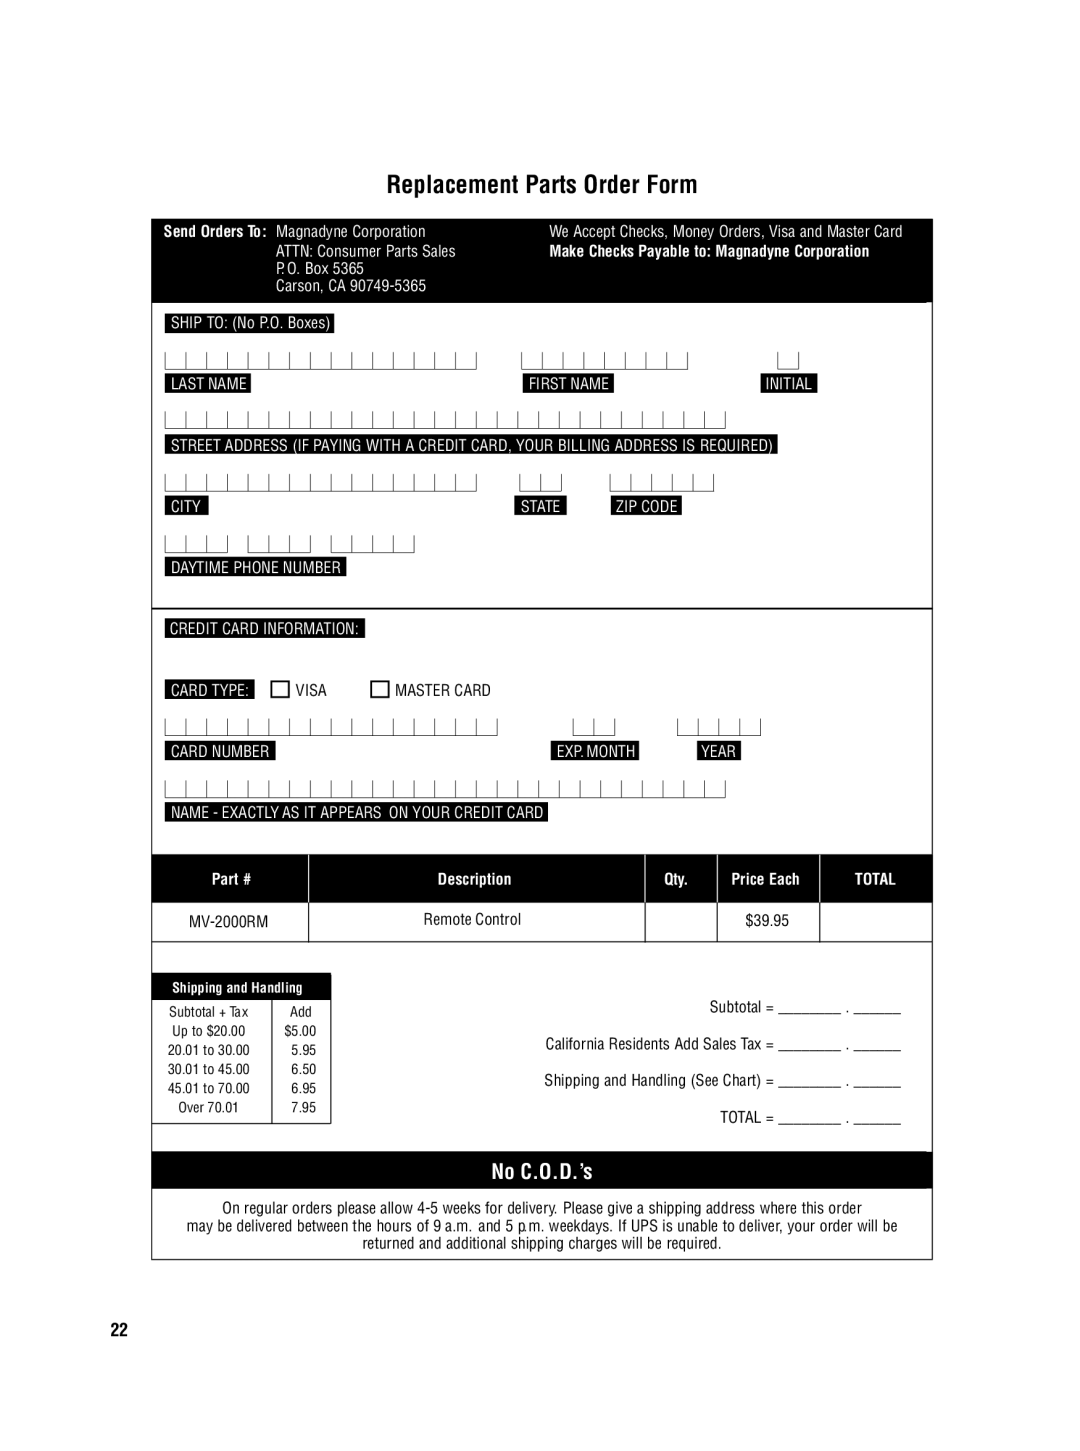 Magnadyne MV-DVD-PL5 Replacement Parts Order Form, No C.O.D.’s, Make Checks Payable to Magnadyne Corporation, Description 